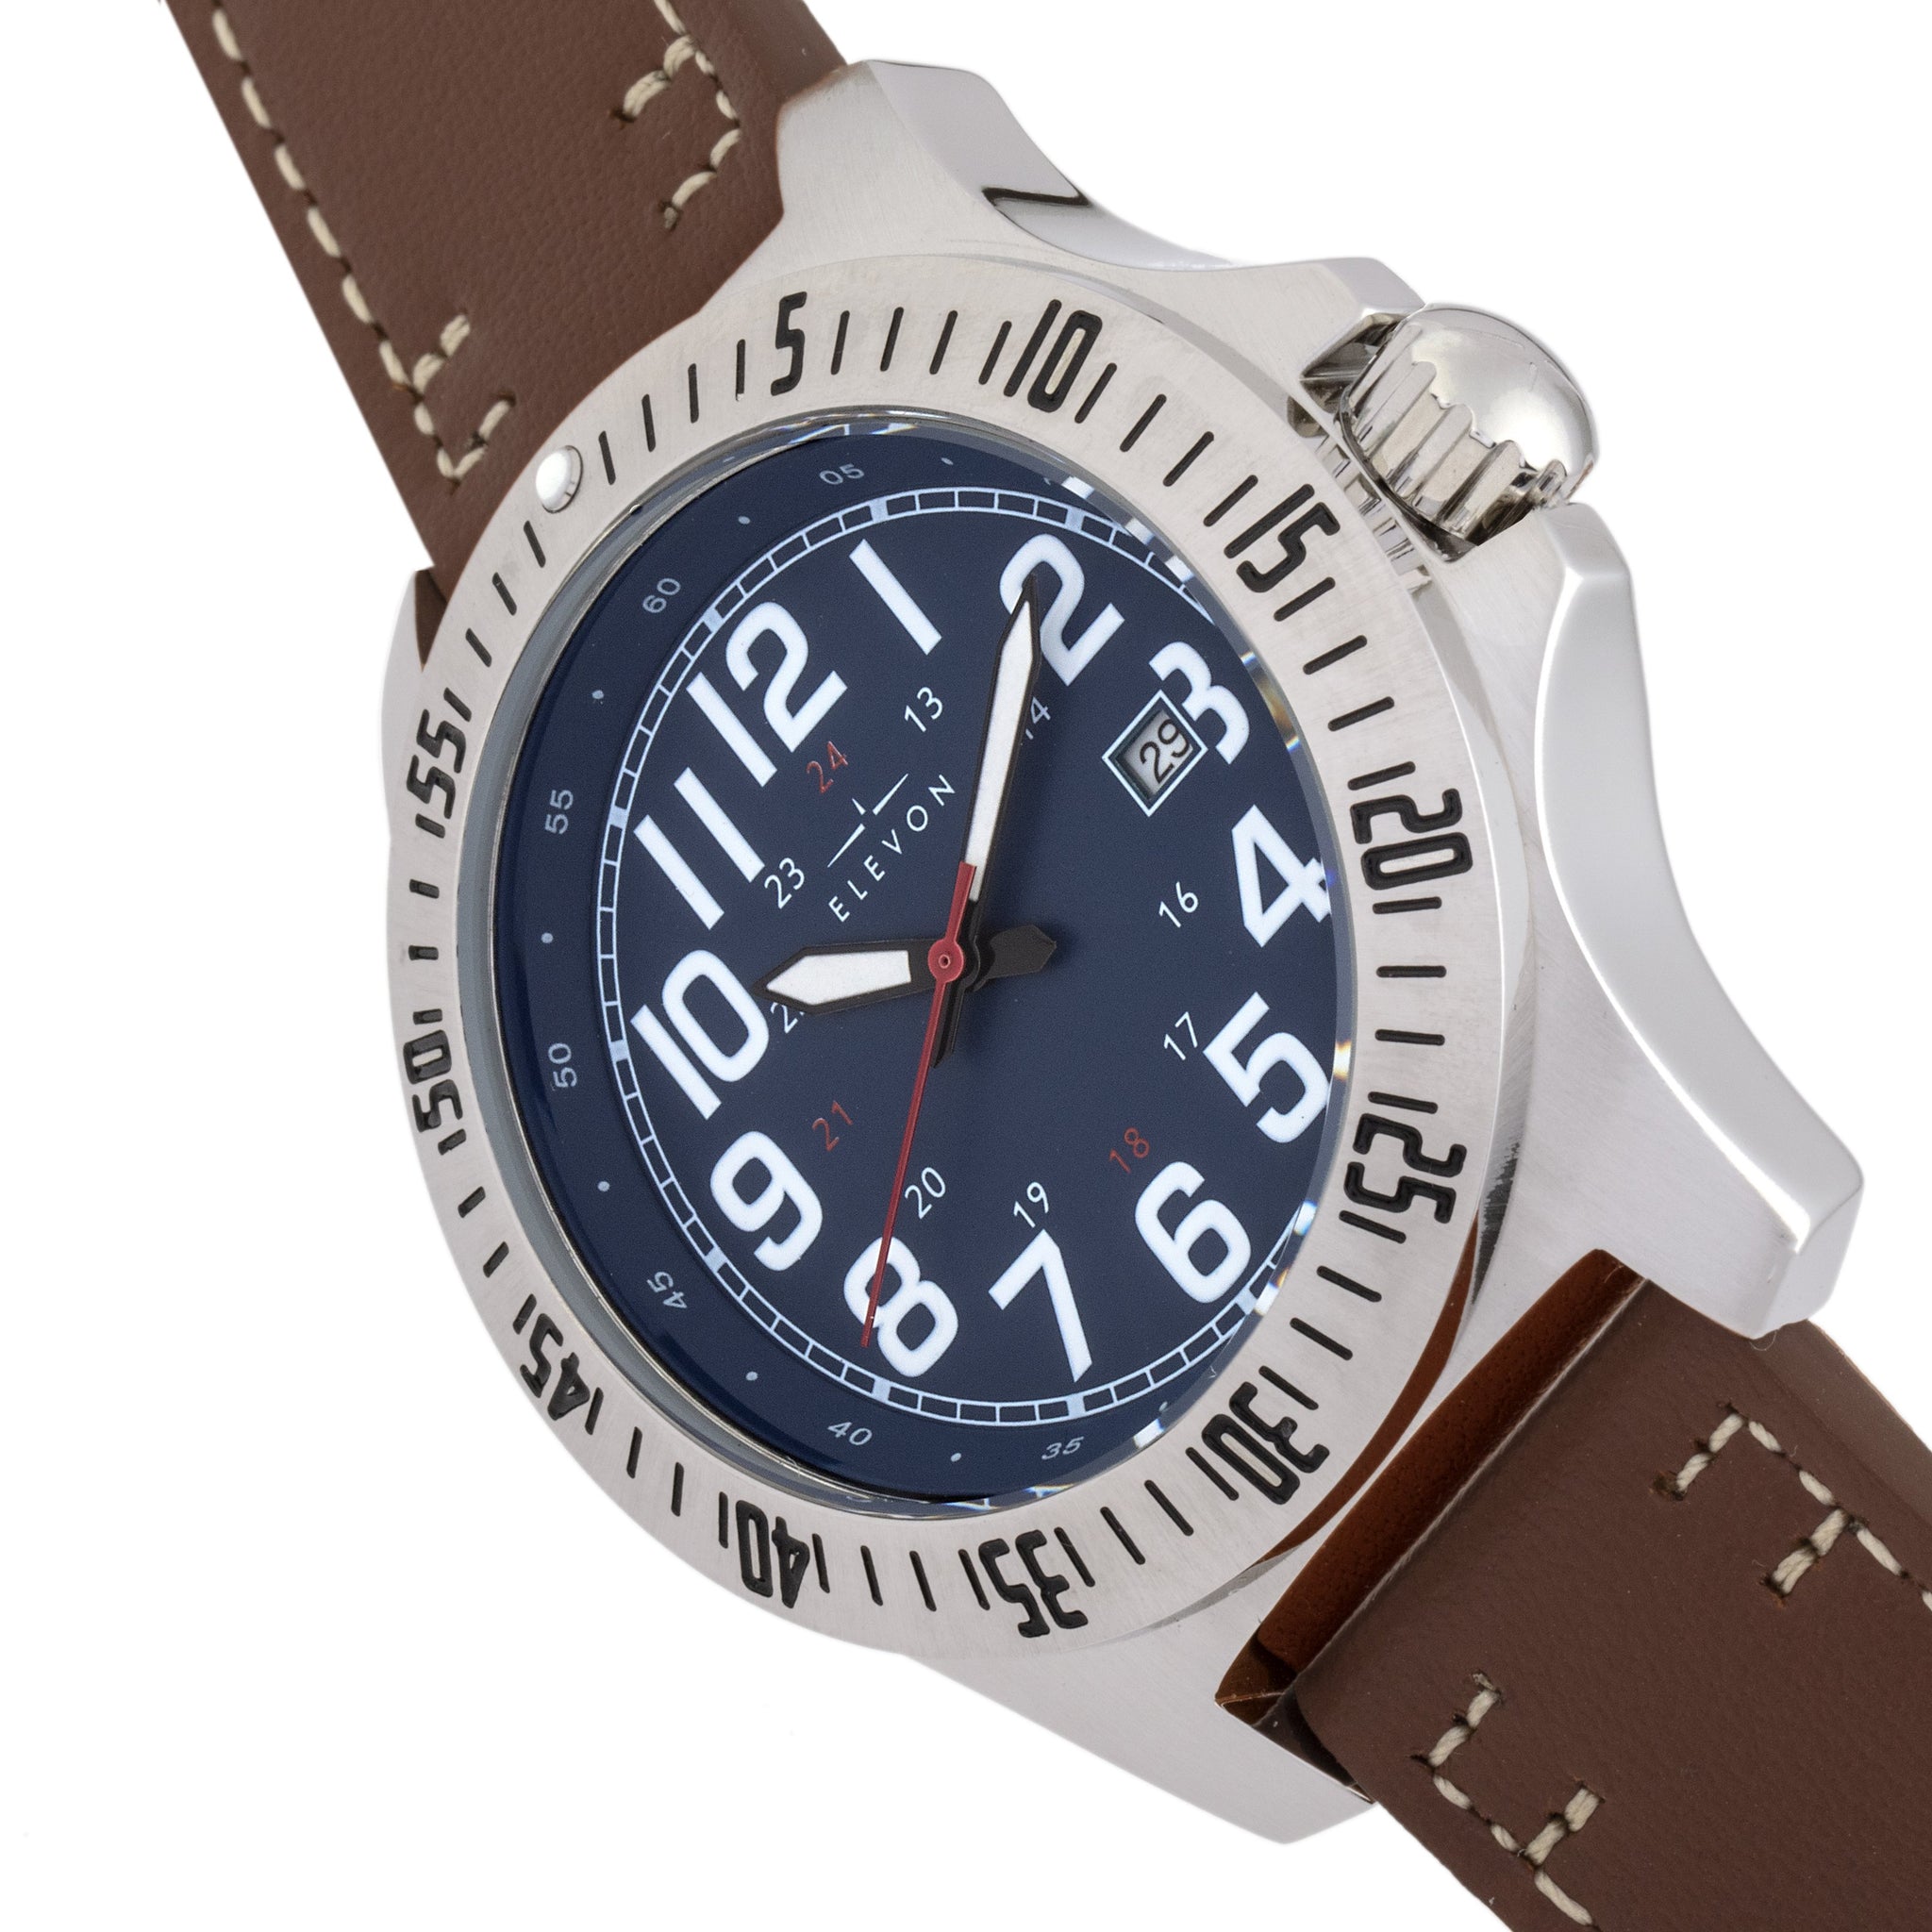 Elevon Aviator Leather-Band Watch w/Date - Brown/Blue - ELE120-11